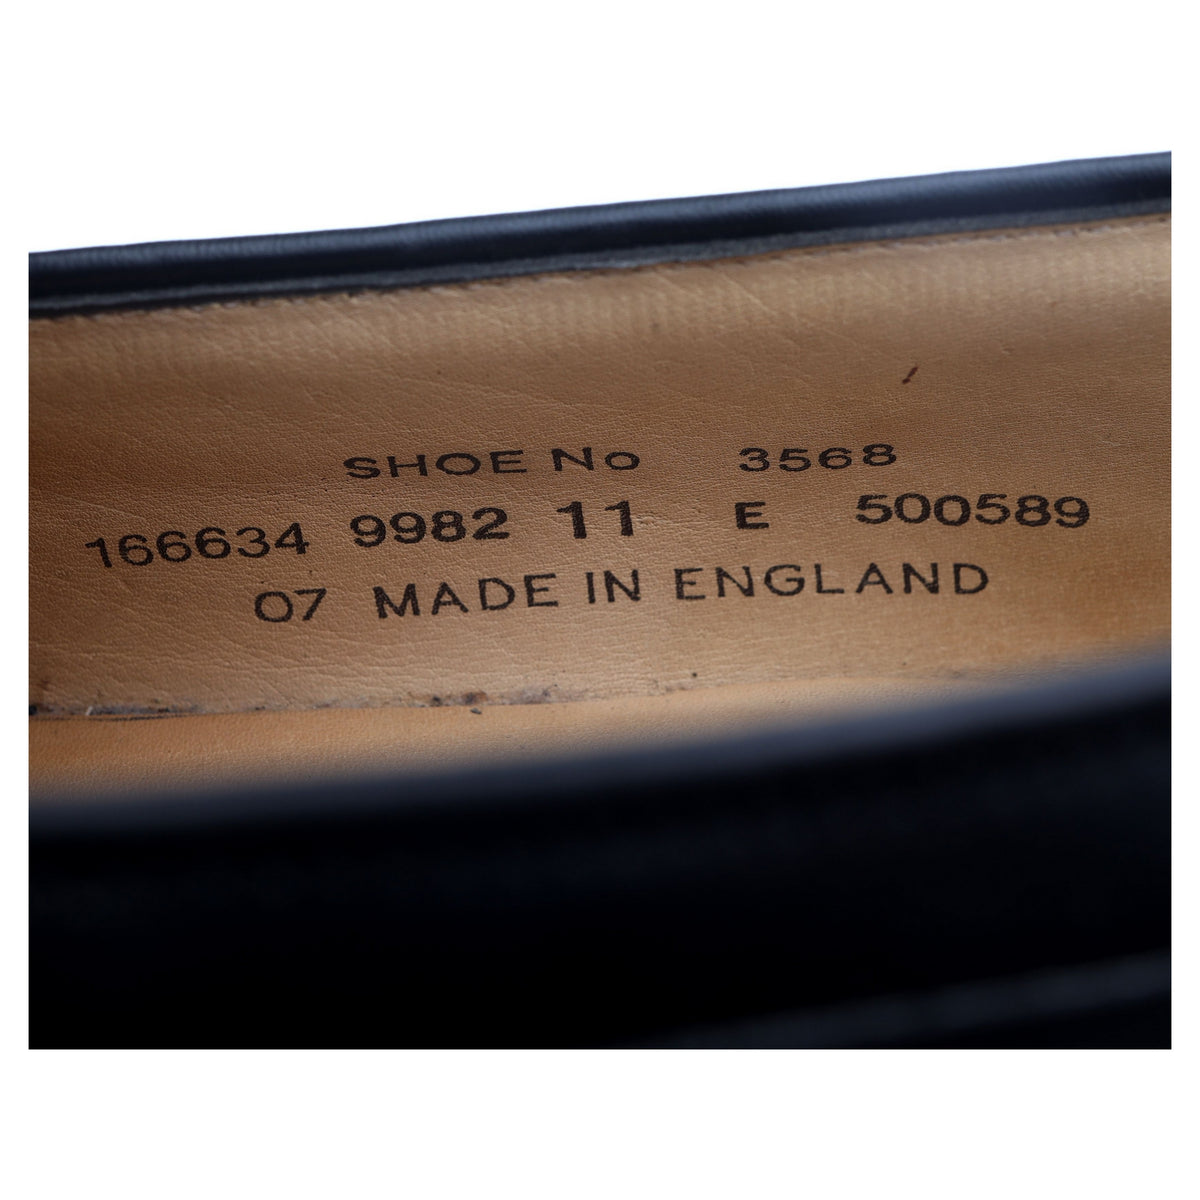 Black Leather Tassel Loafers UK 11 E